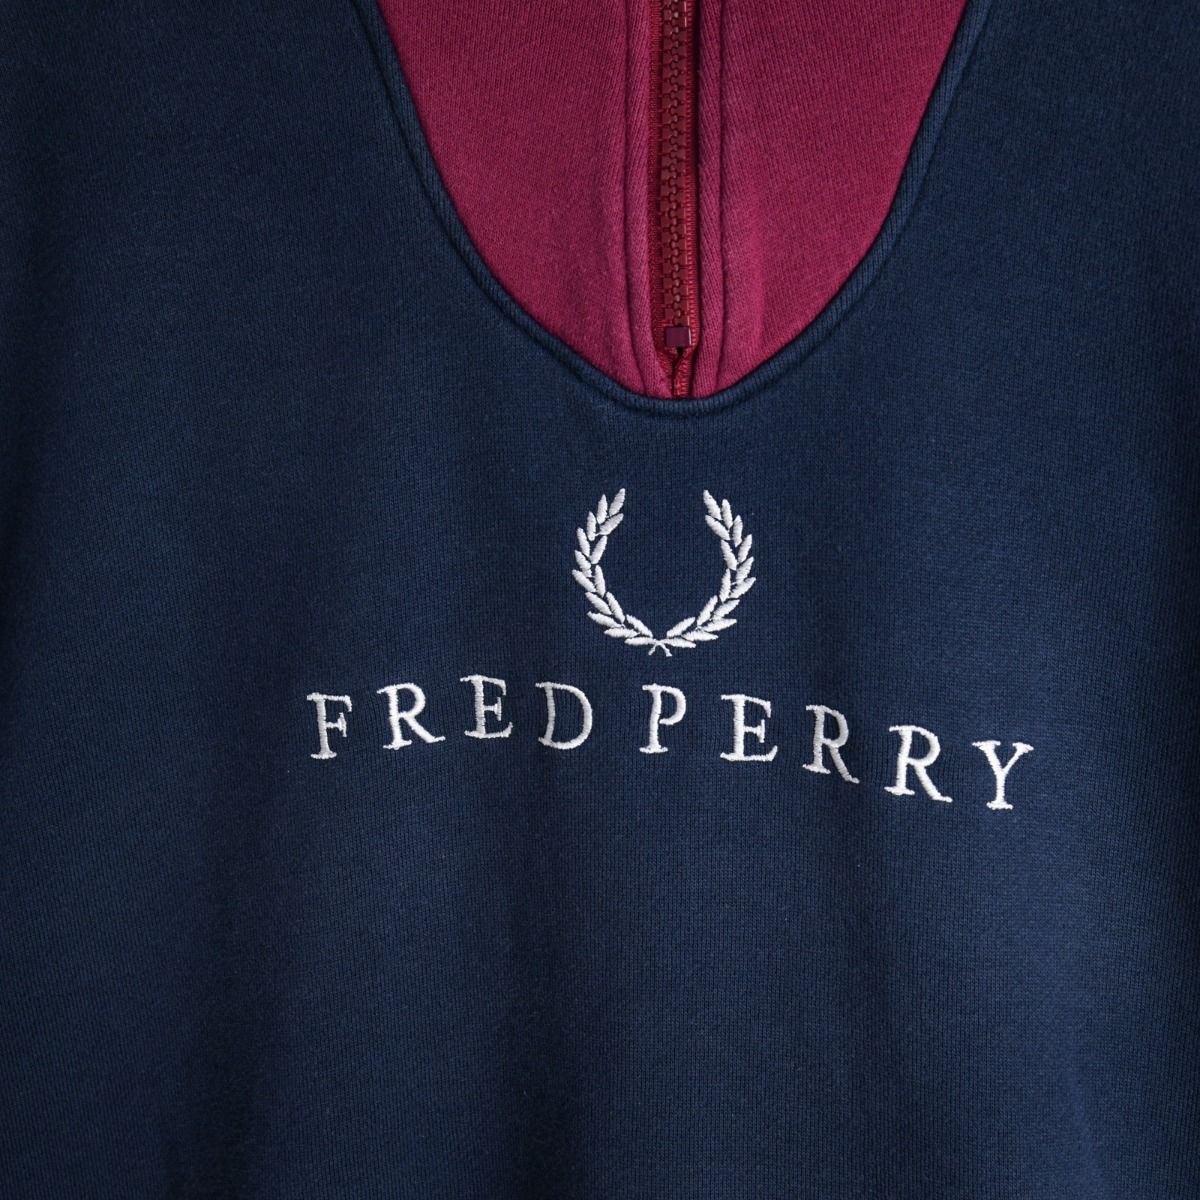 Fred Perry 1990s Sweatshirt